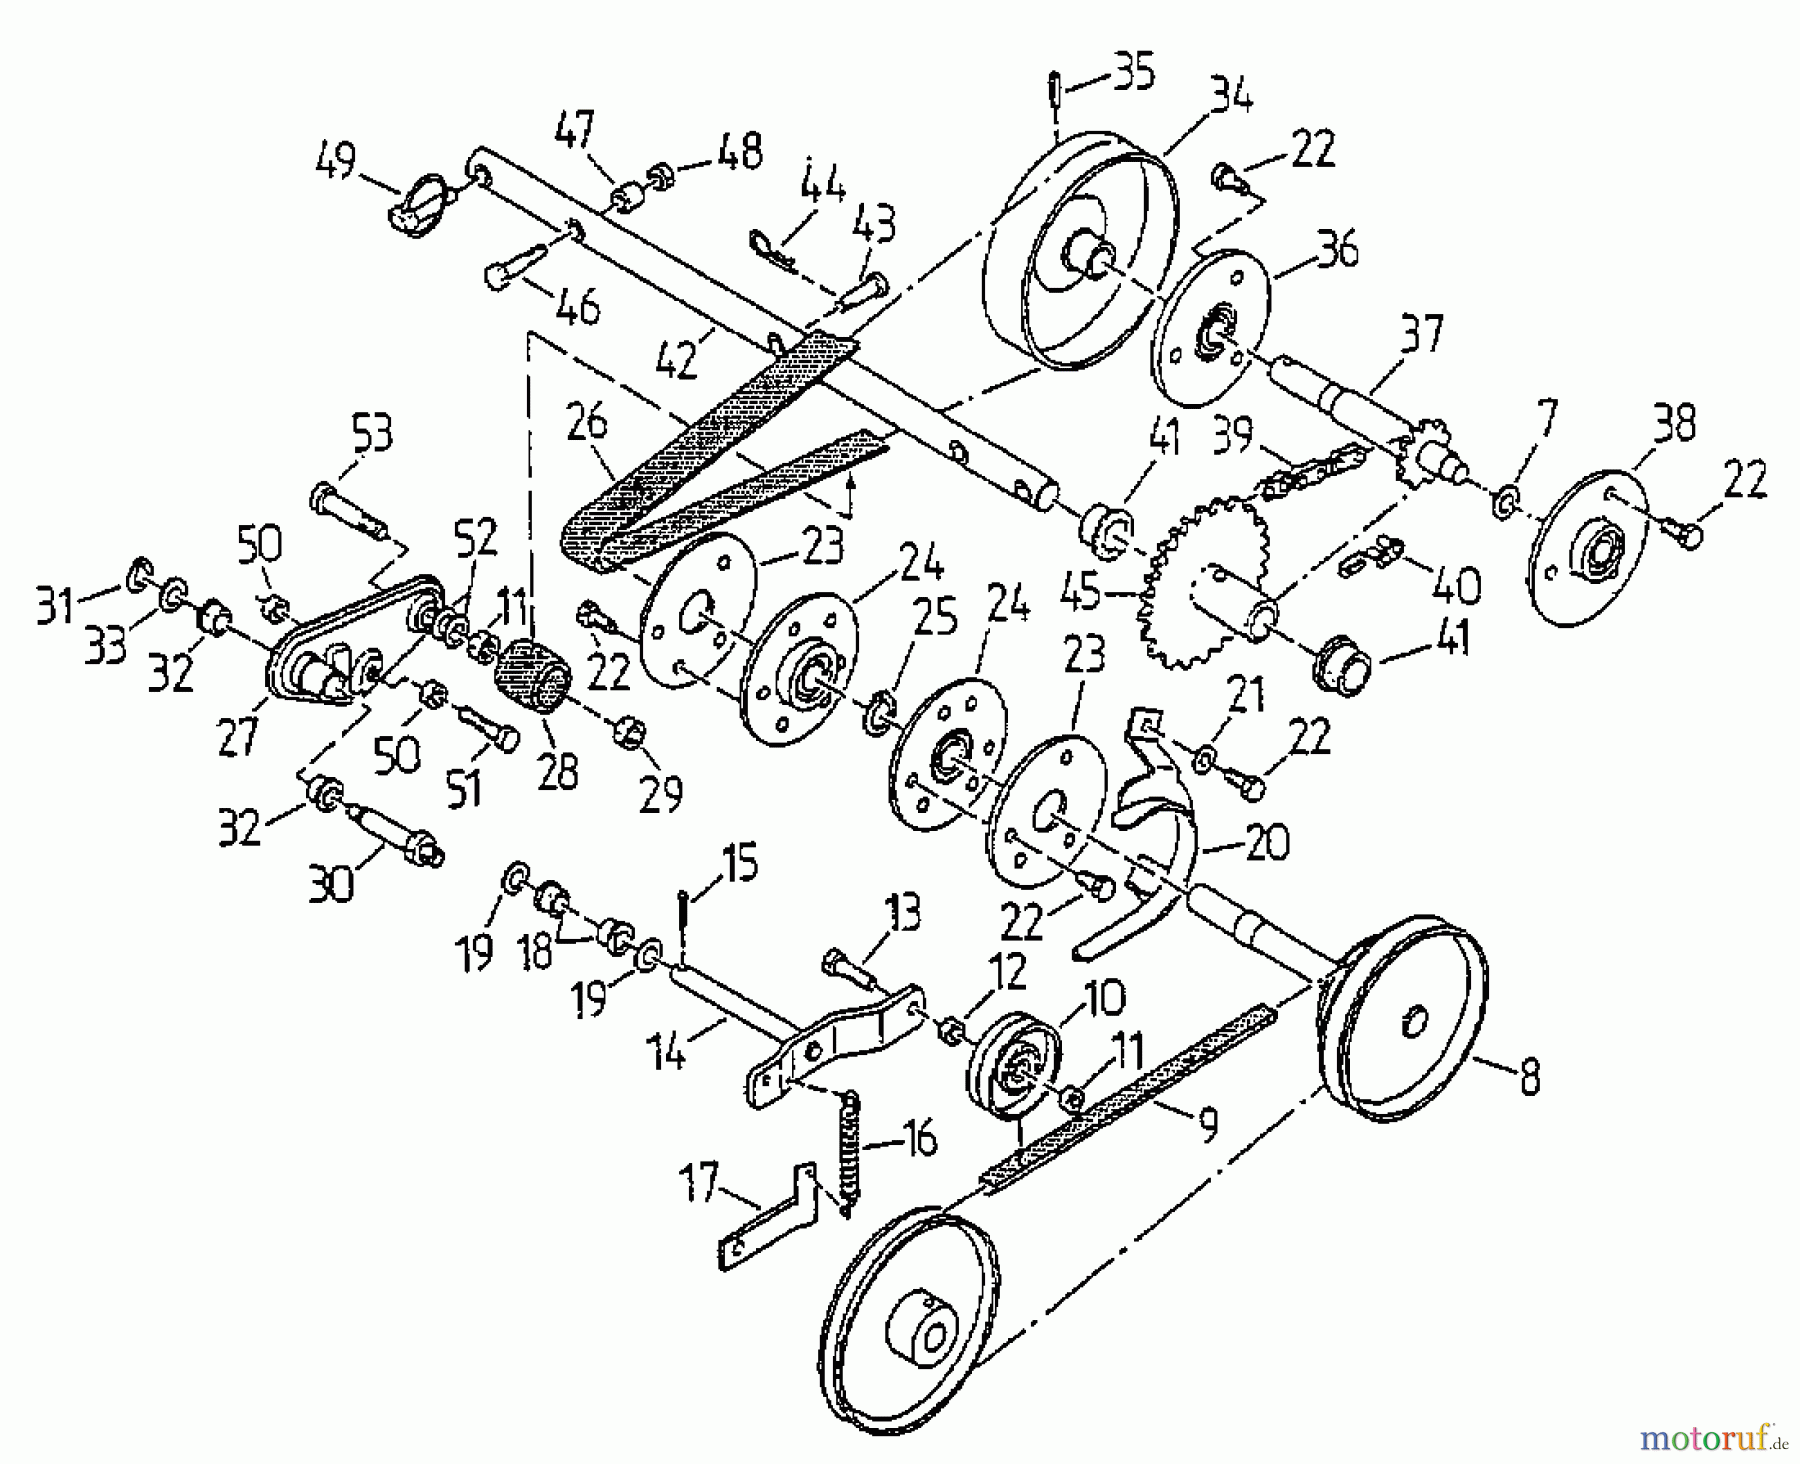  Gutbrod Cutter bar mower BM 91 07517.04  (1998) Drive system